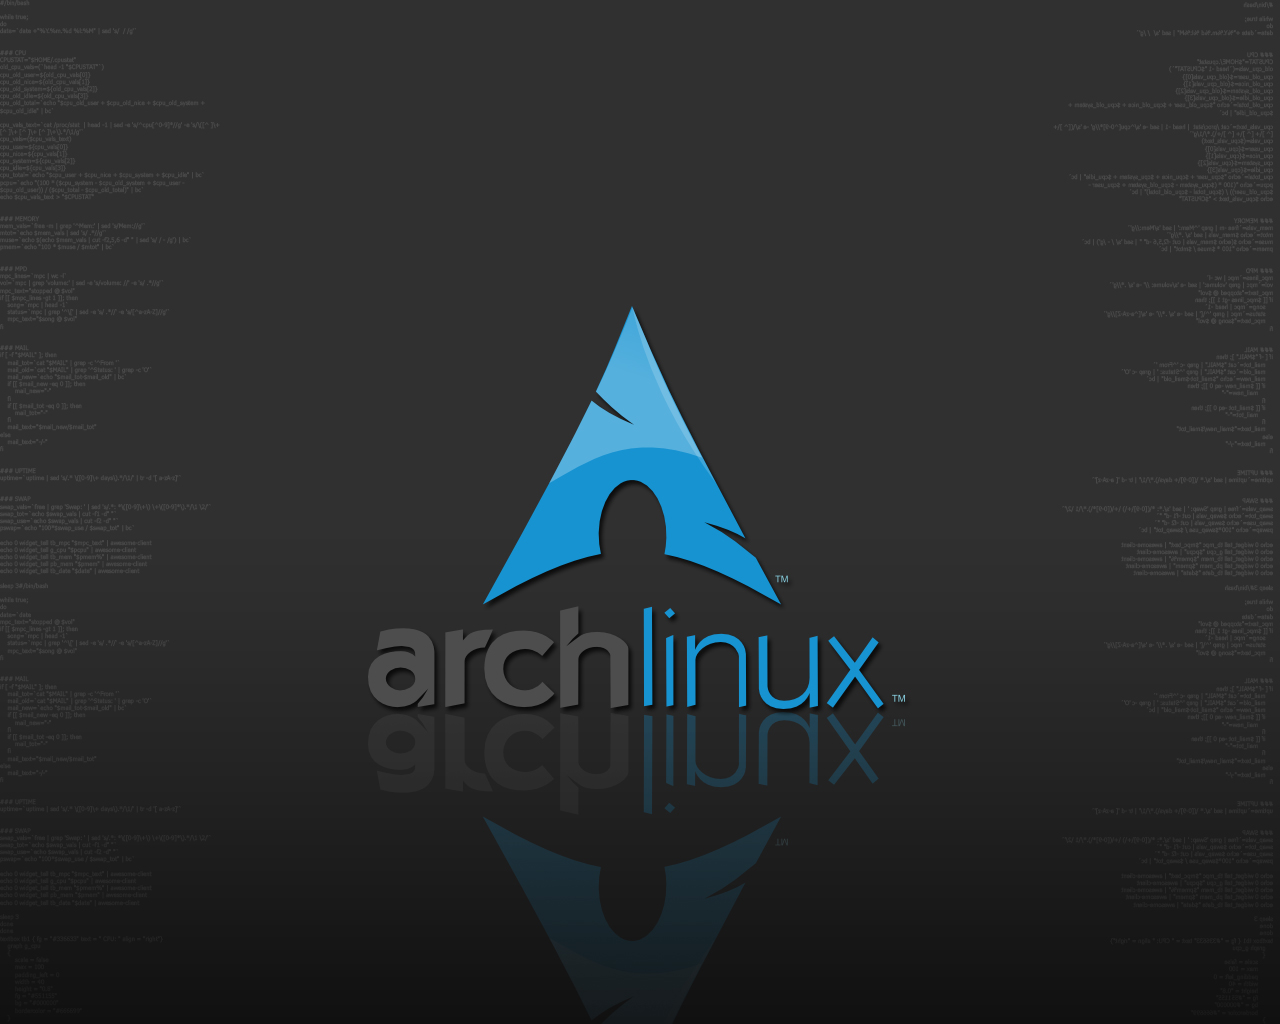 Archlinux_code_1